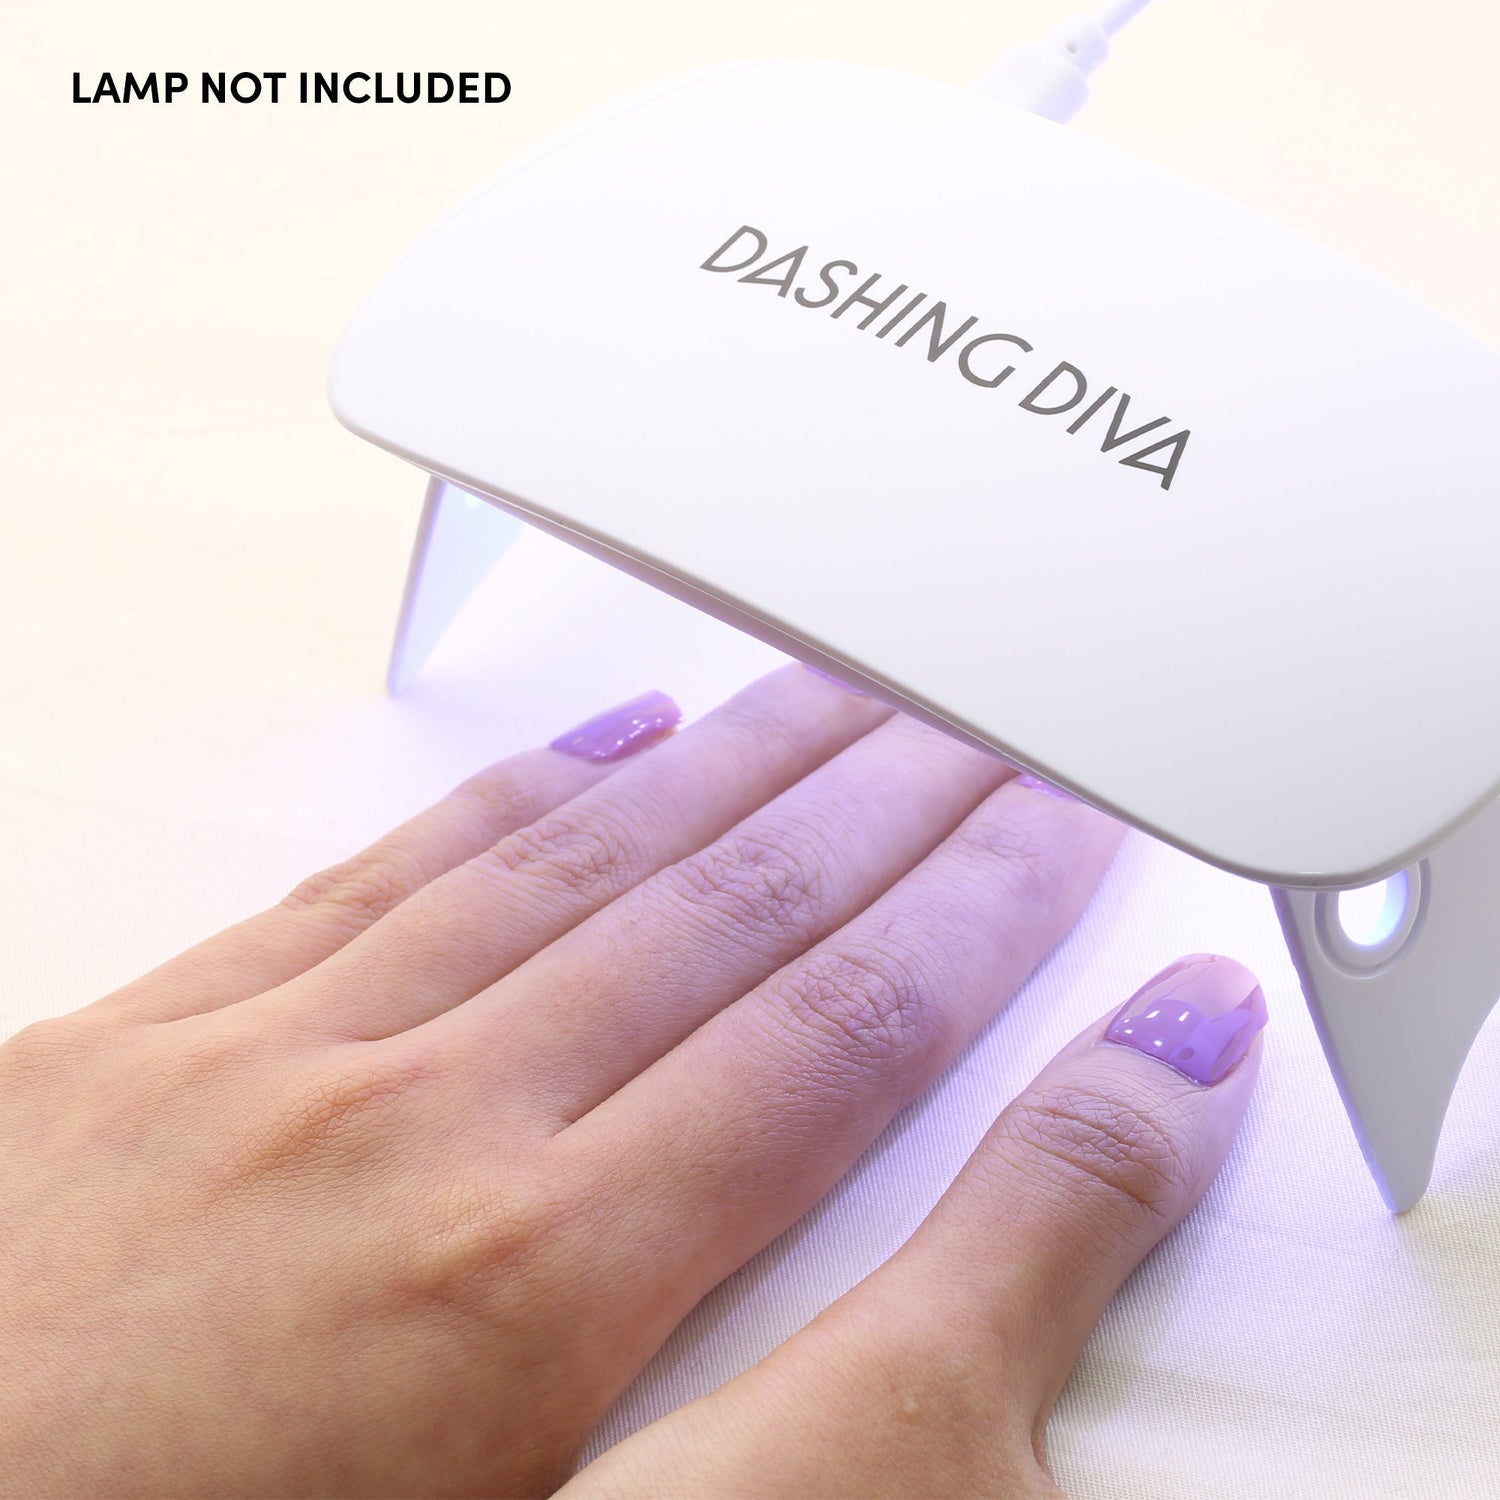 Pro LED Lamp | Semi-Cured Gel Nail Strips | Glaze Tools | Dashing Diva